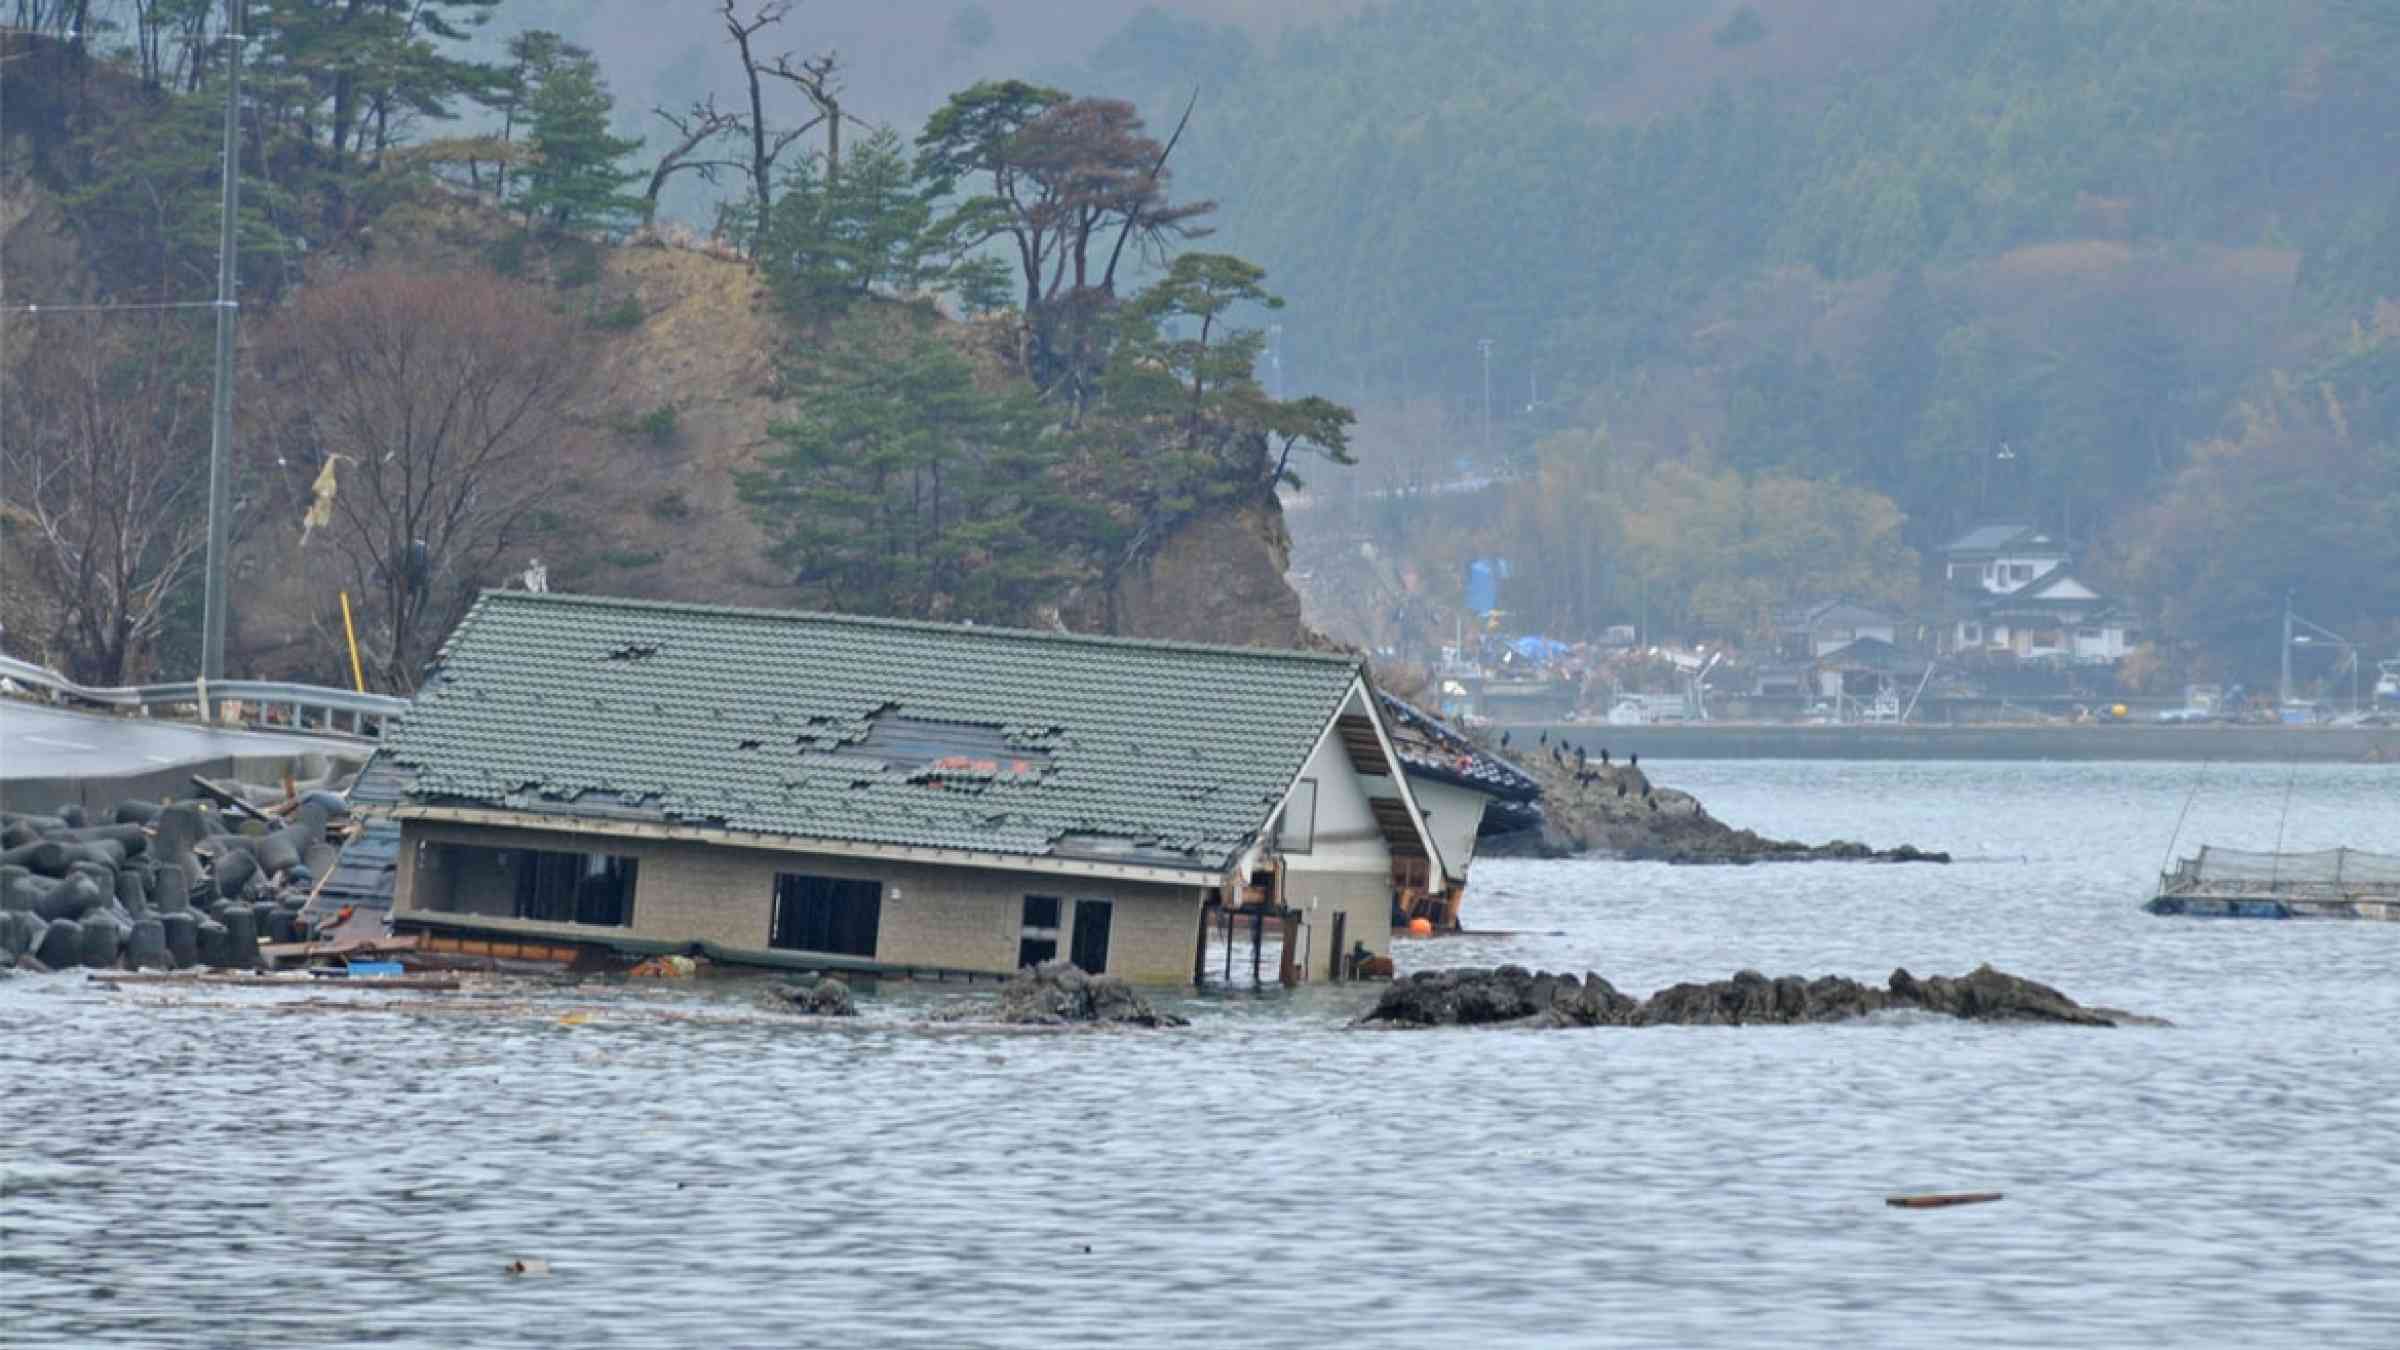 Impact of the Great East Japan Earthquake and tsunami